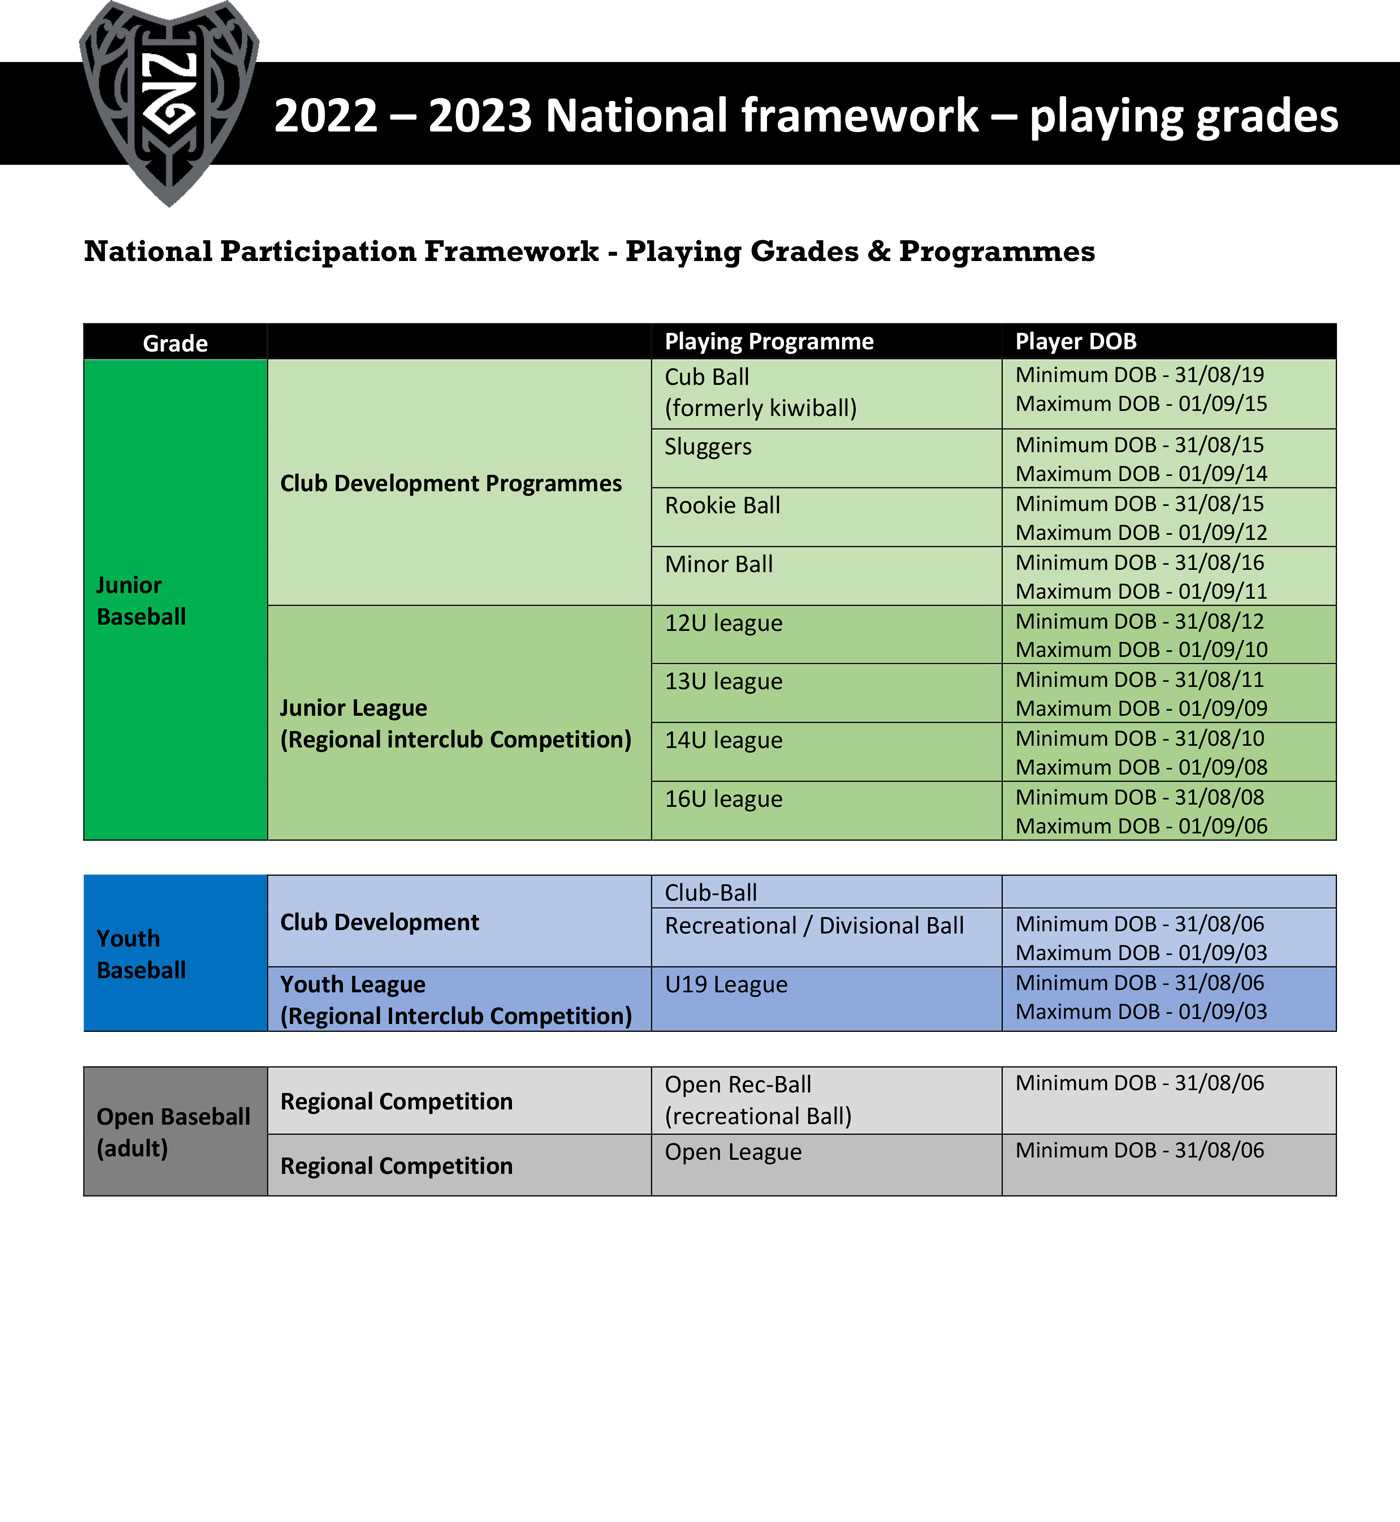 Microsoft Word - 2022 - 2023 National Framework Playing Grades.docx